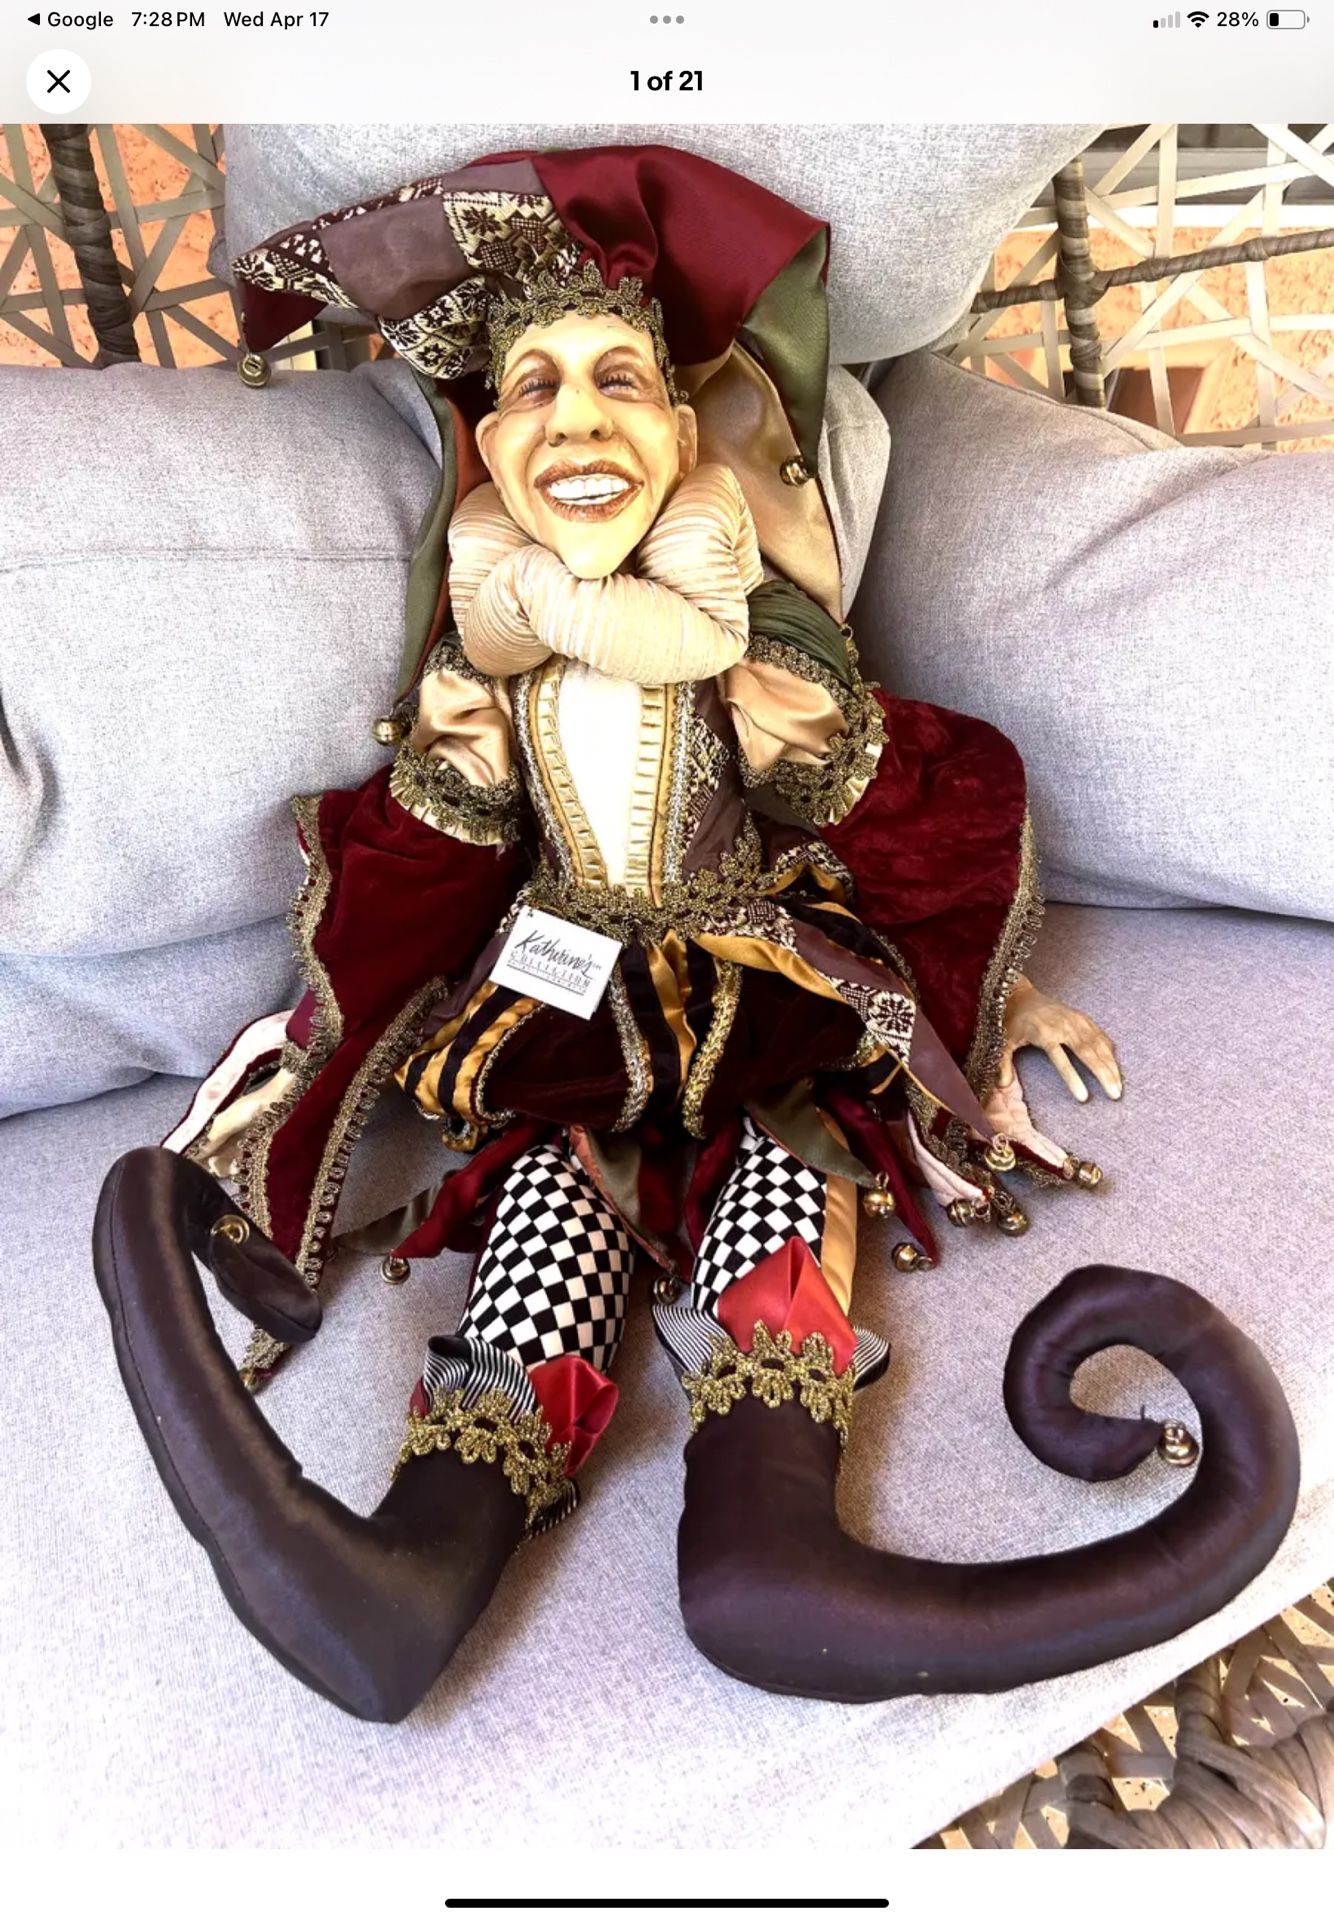 Katherine's Collection Wayne Kleski "Zeno" Retired Jester Doll 27”